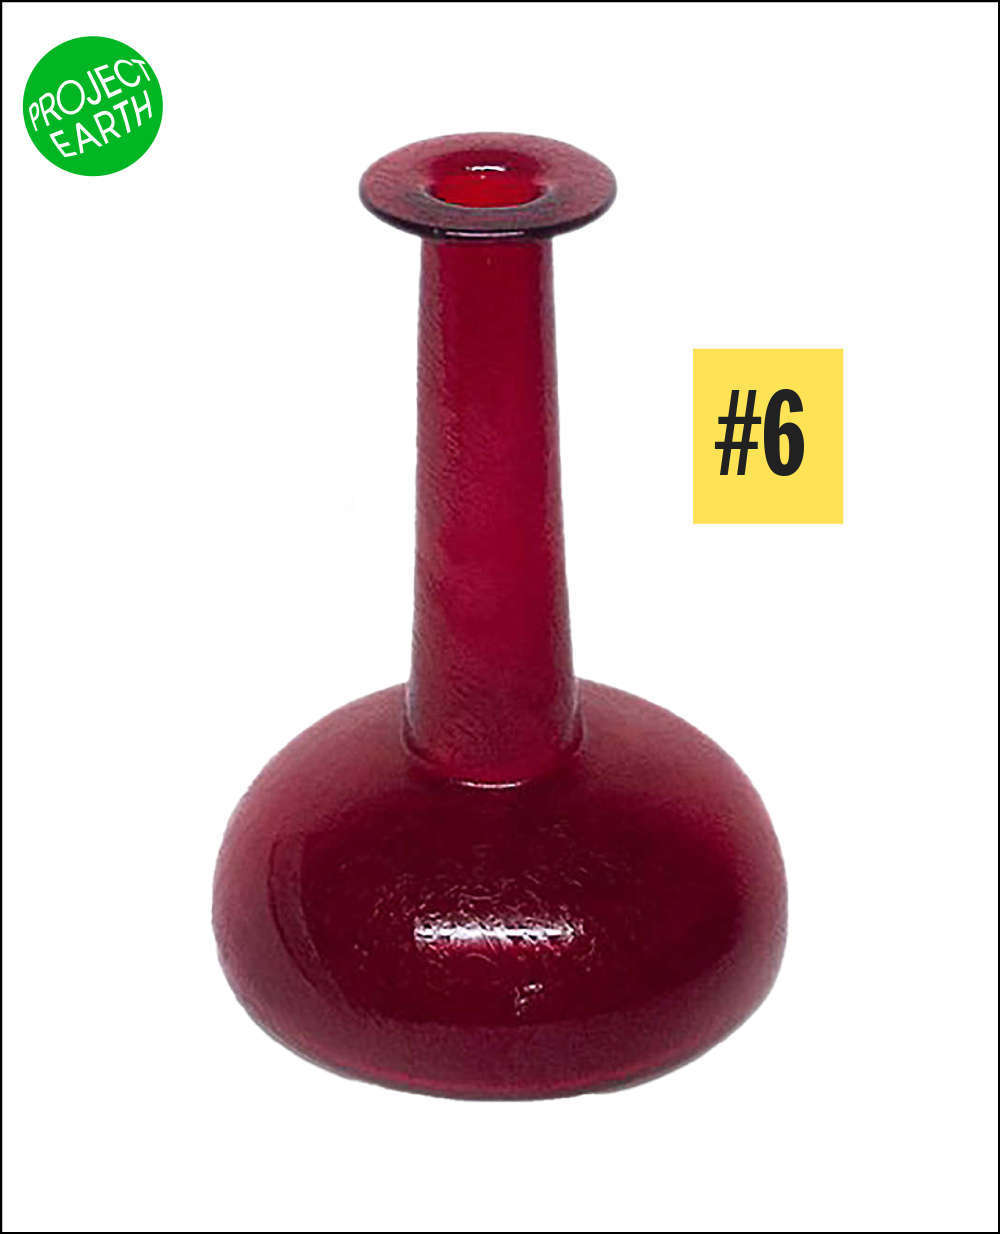 vinterior-pre-loved-1960s-italian-circular-base-textured-finish-glass-vase